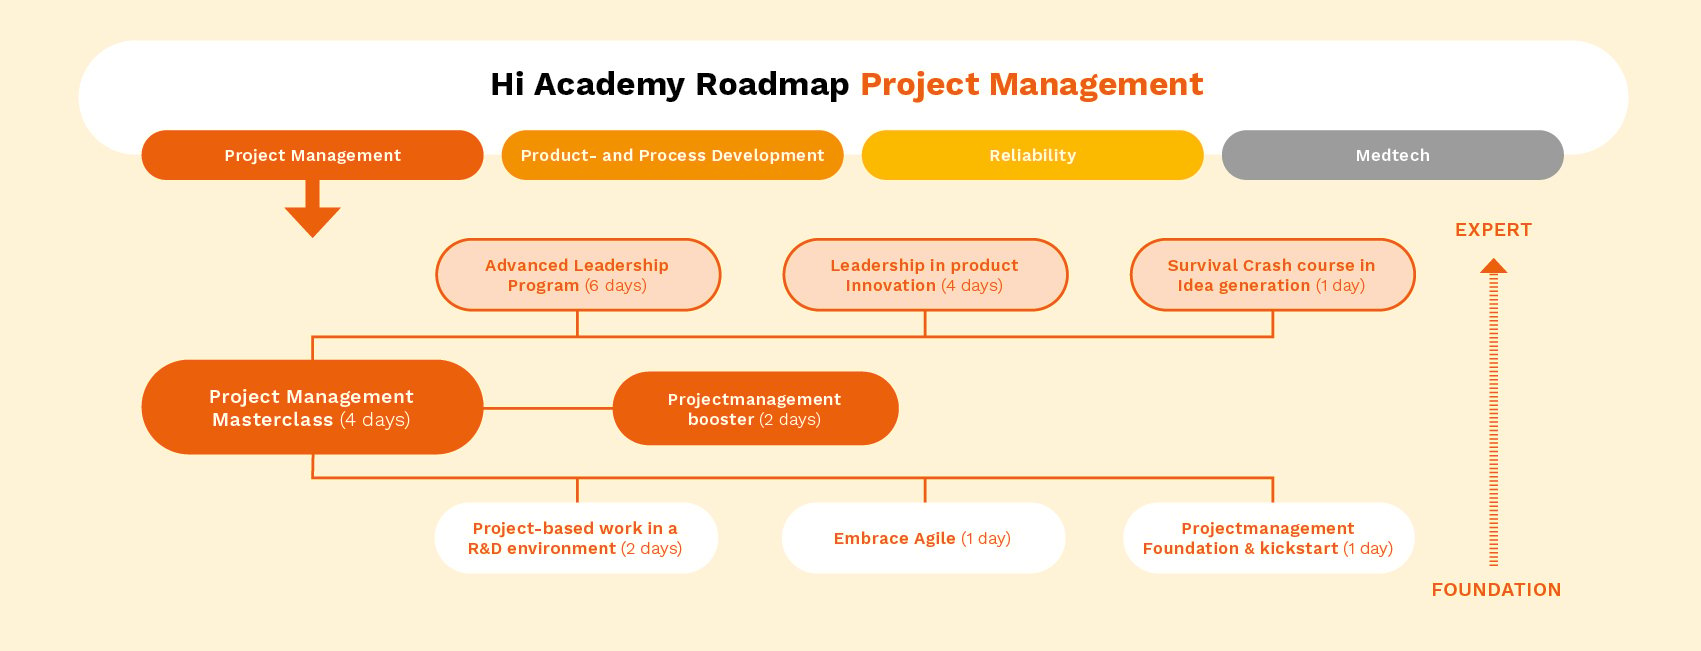 Hi Academy roadmap